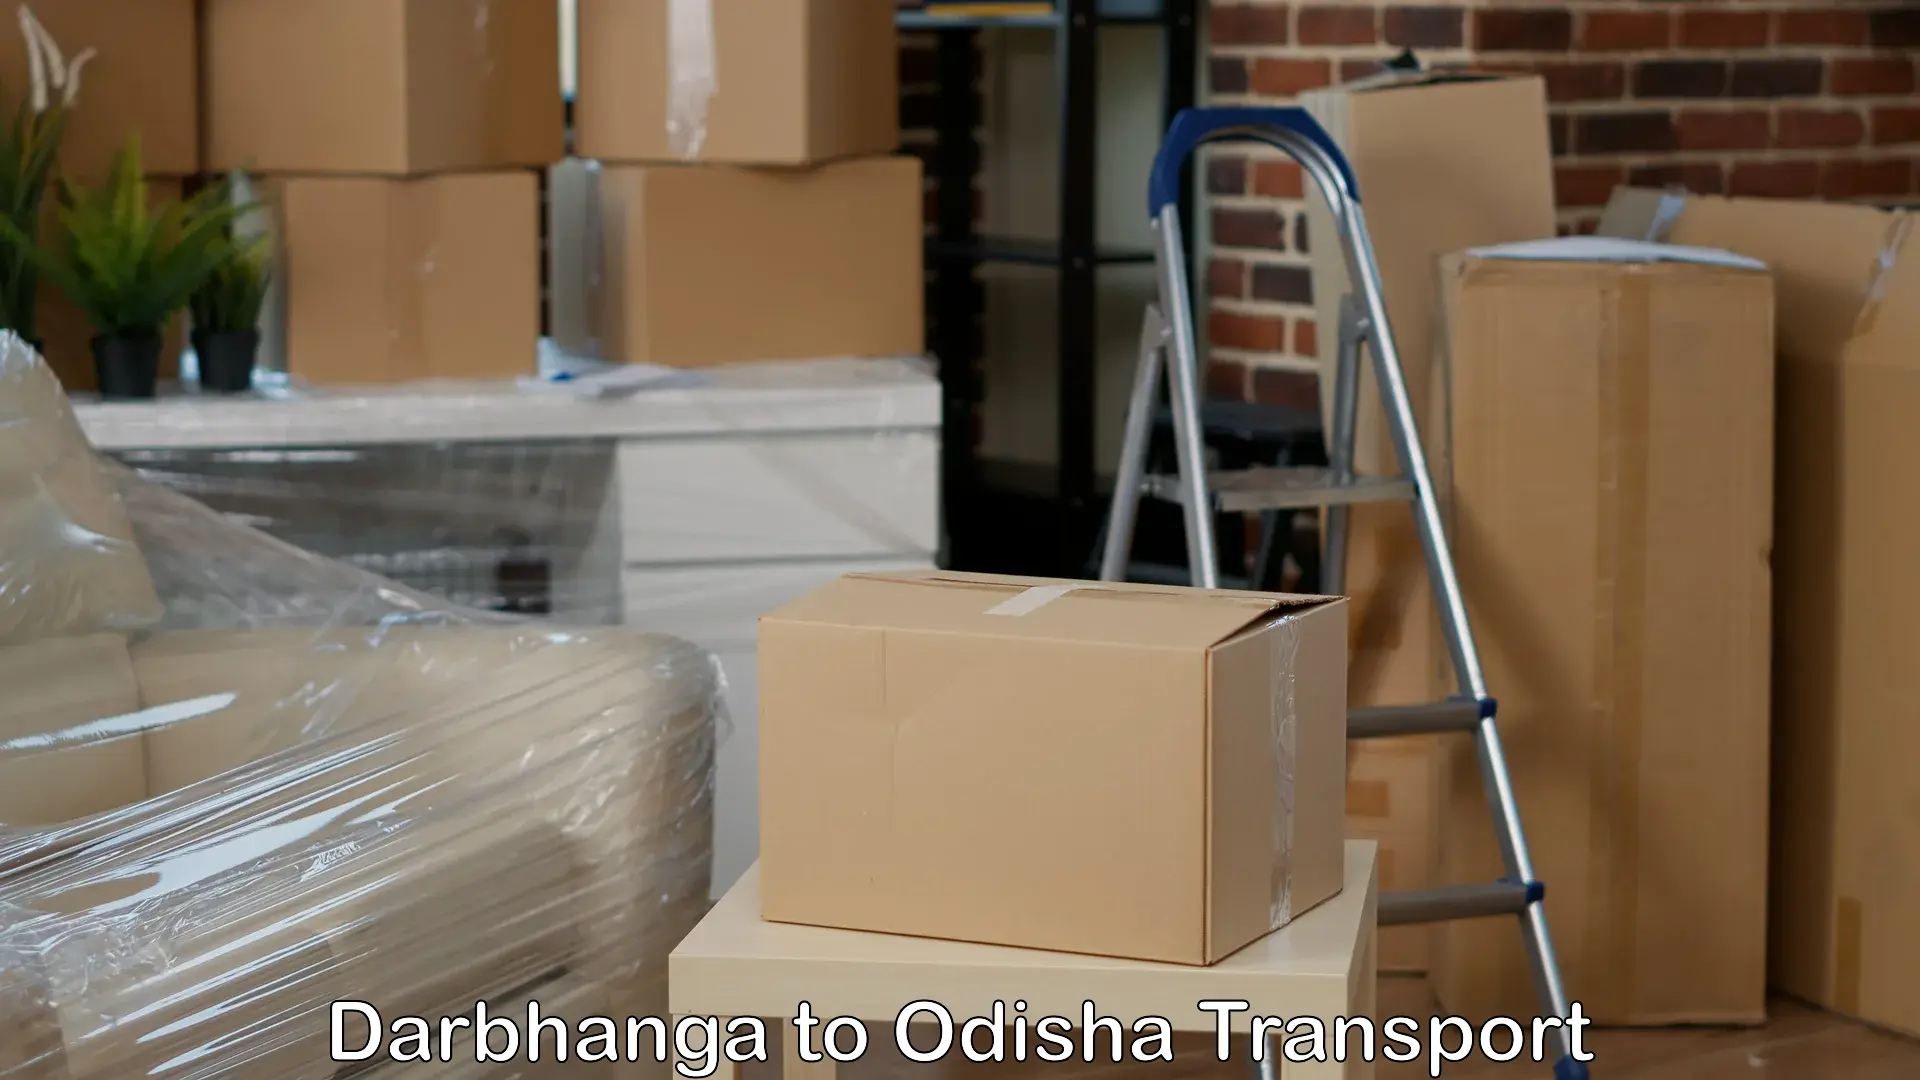 Truck transport companies in India in Darbhanga to Chandinchowk